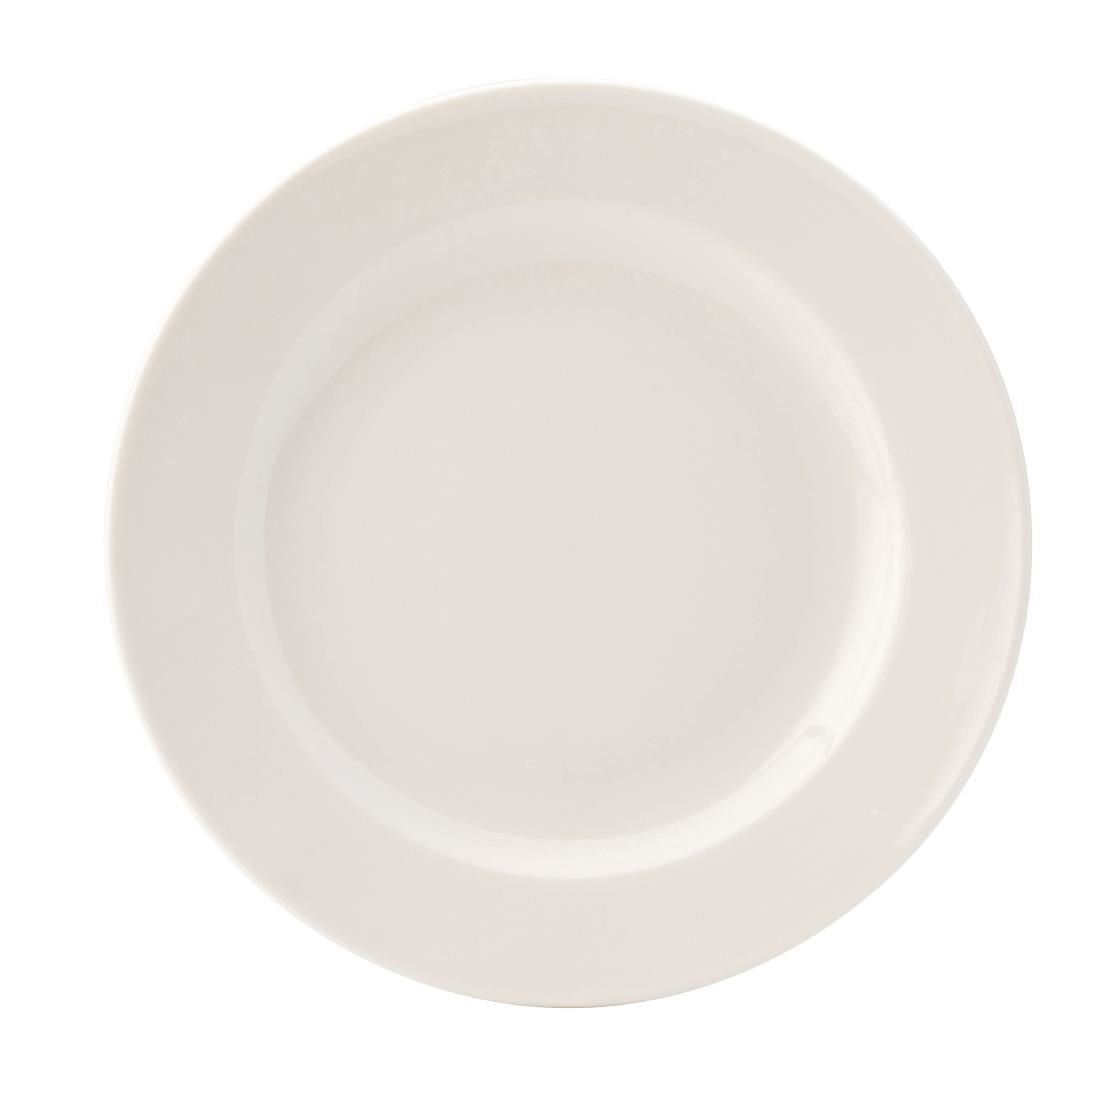 Utopia Pure White Wide Rim Plates 170mm (Pack of 24)